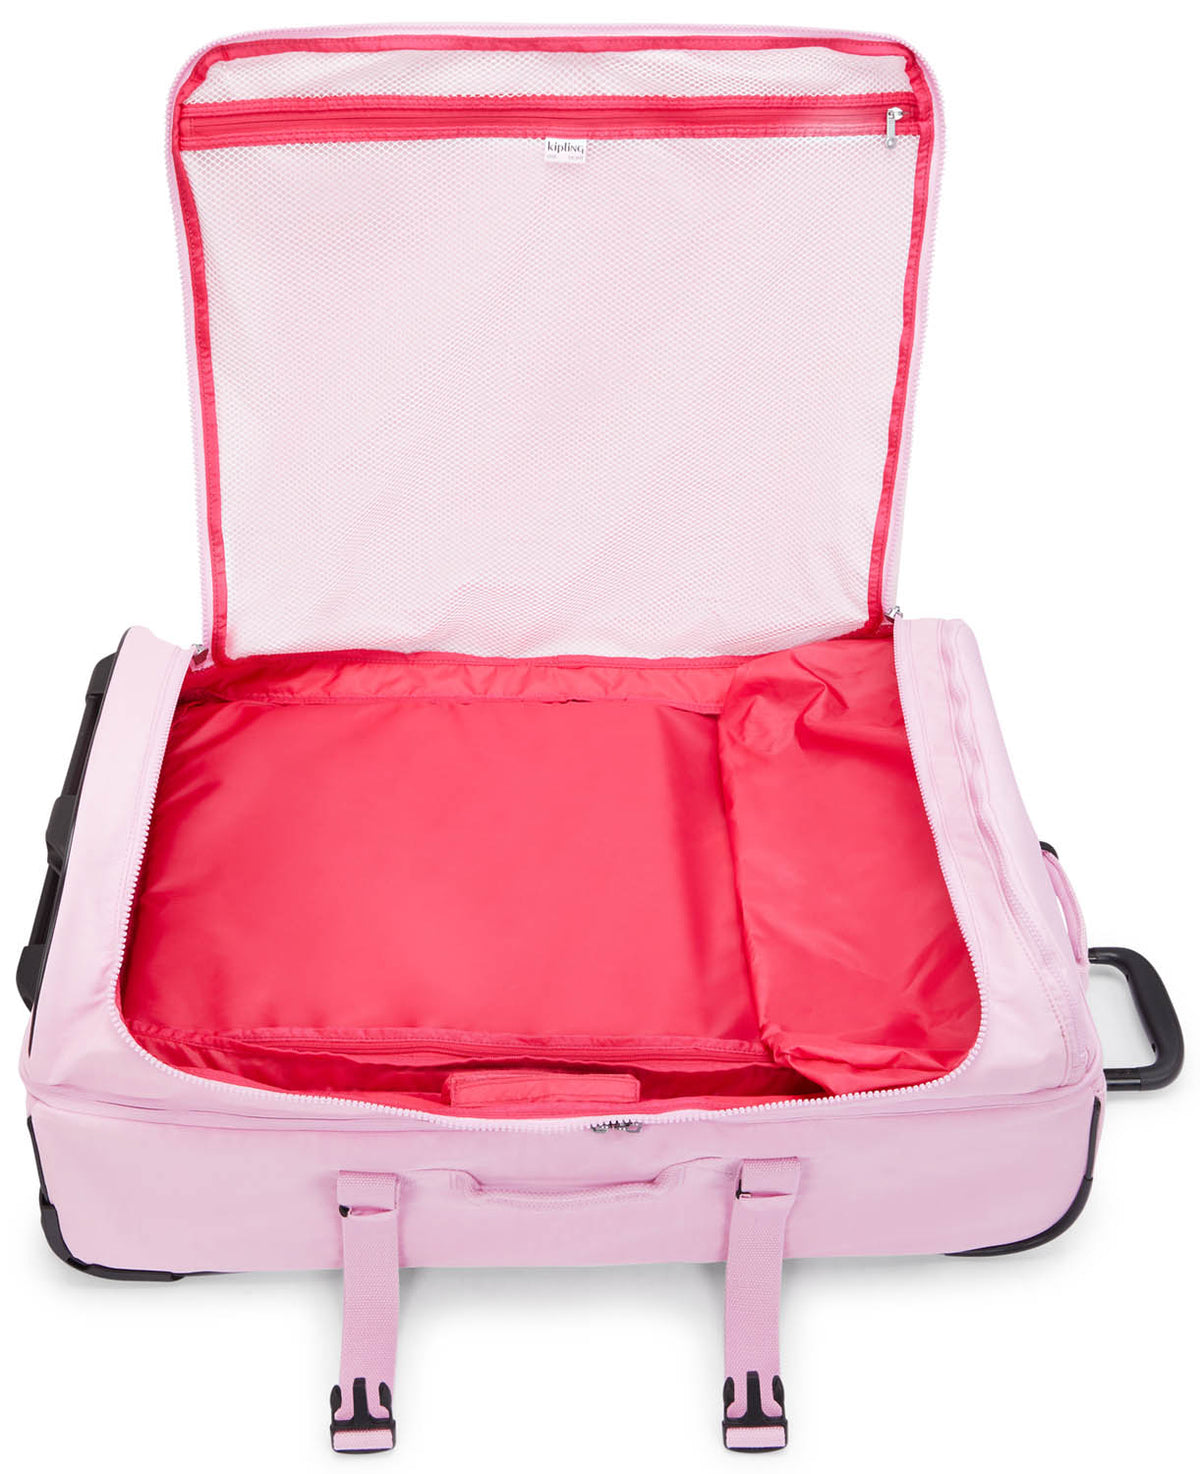 Kipling Aviana L Suitcase - Blooming Pink